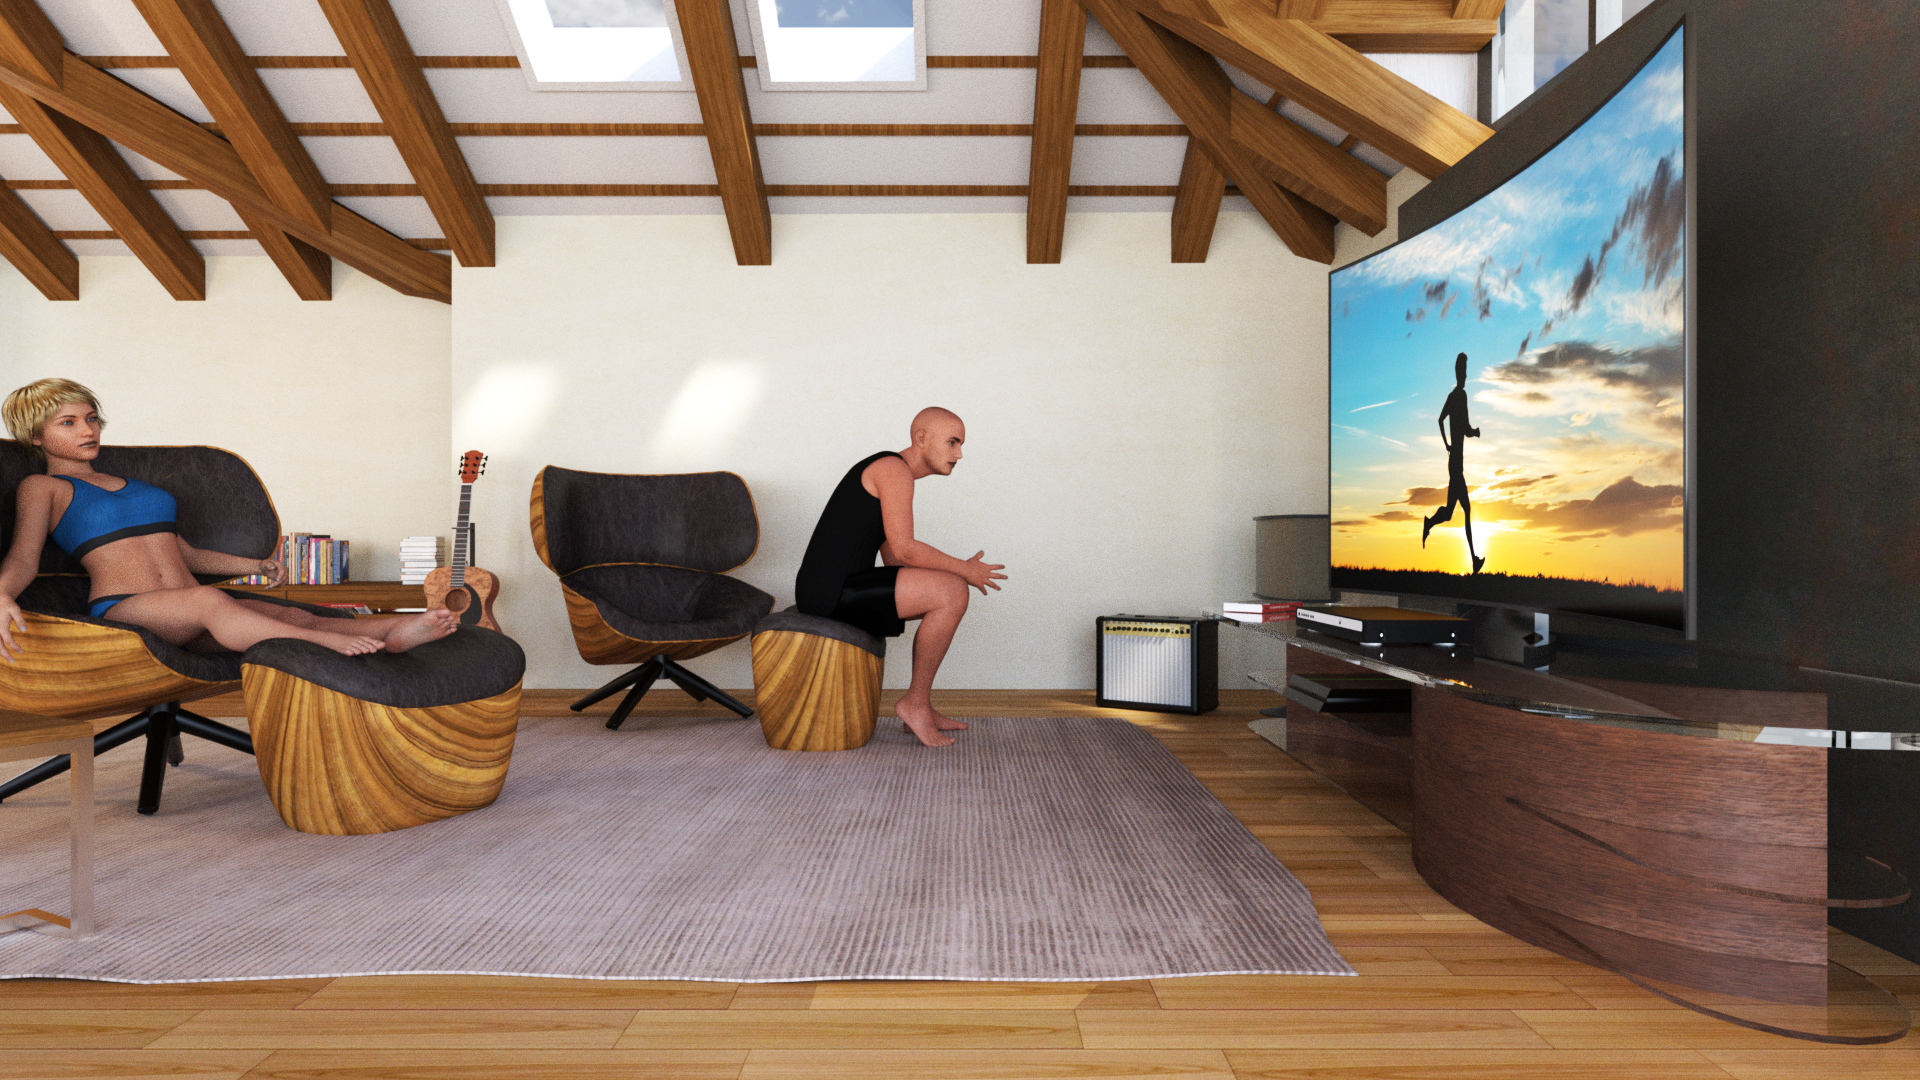 Attic Entertainment Room by: Tesla3dCorp, 3D Models by Daz 3D